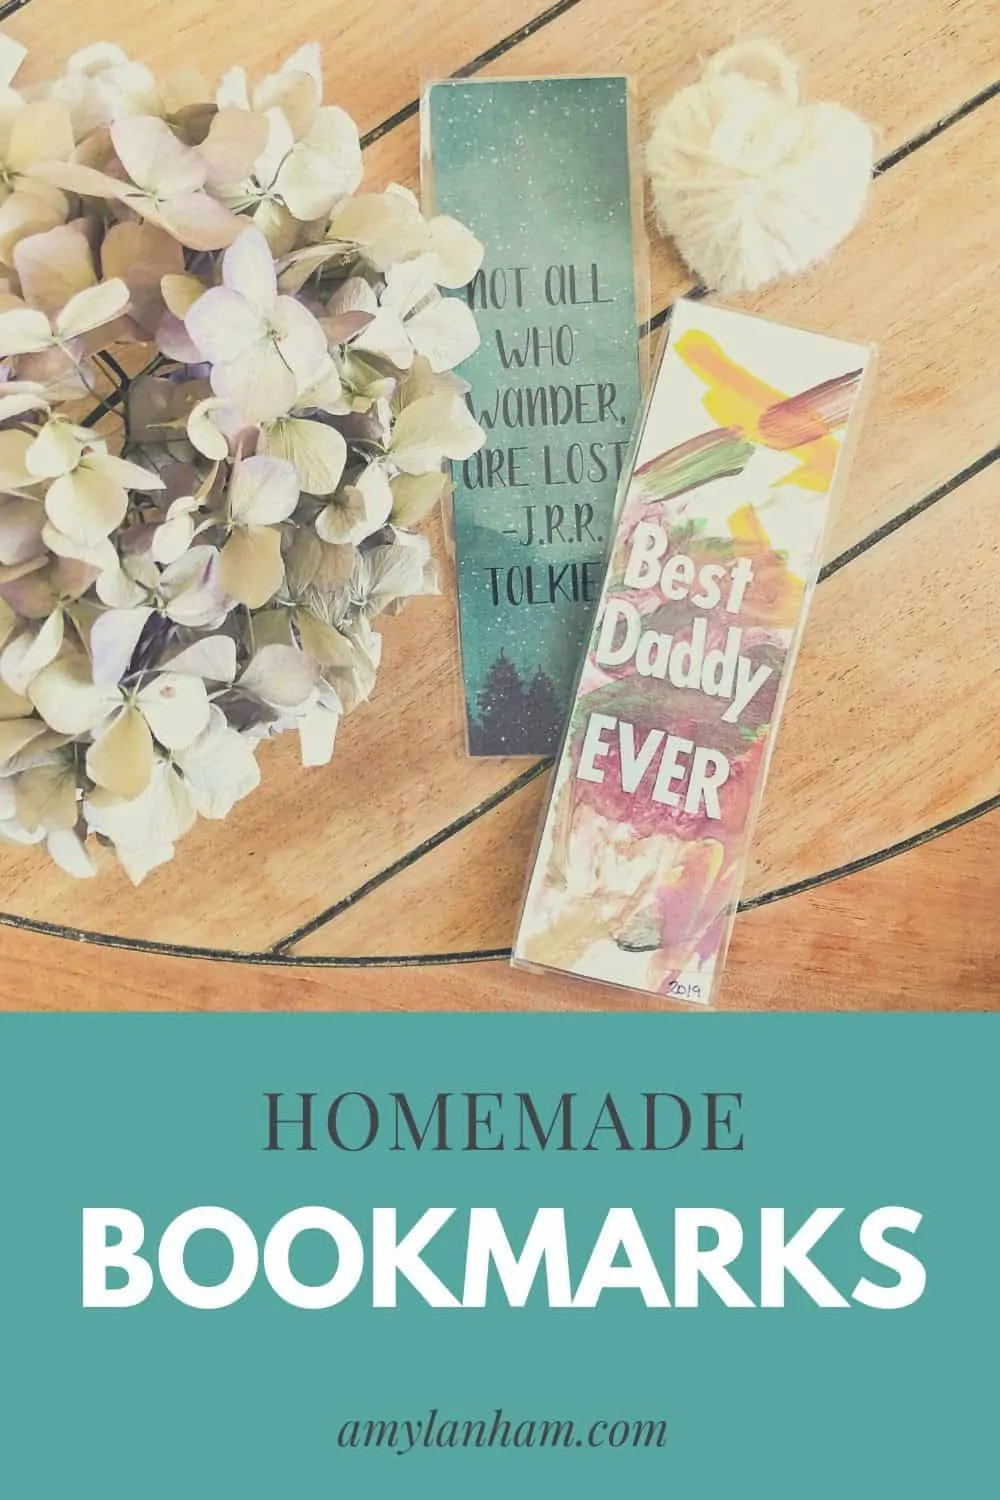 Homemade bookmarks